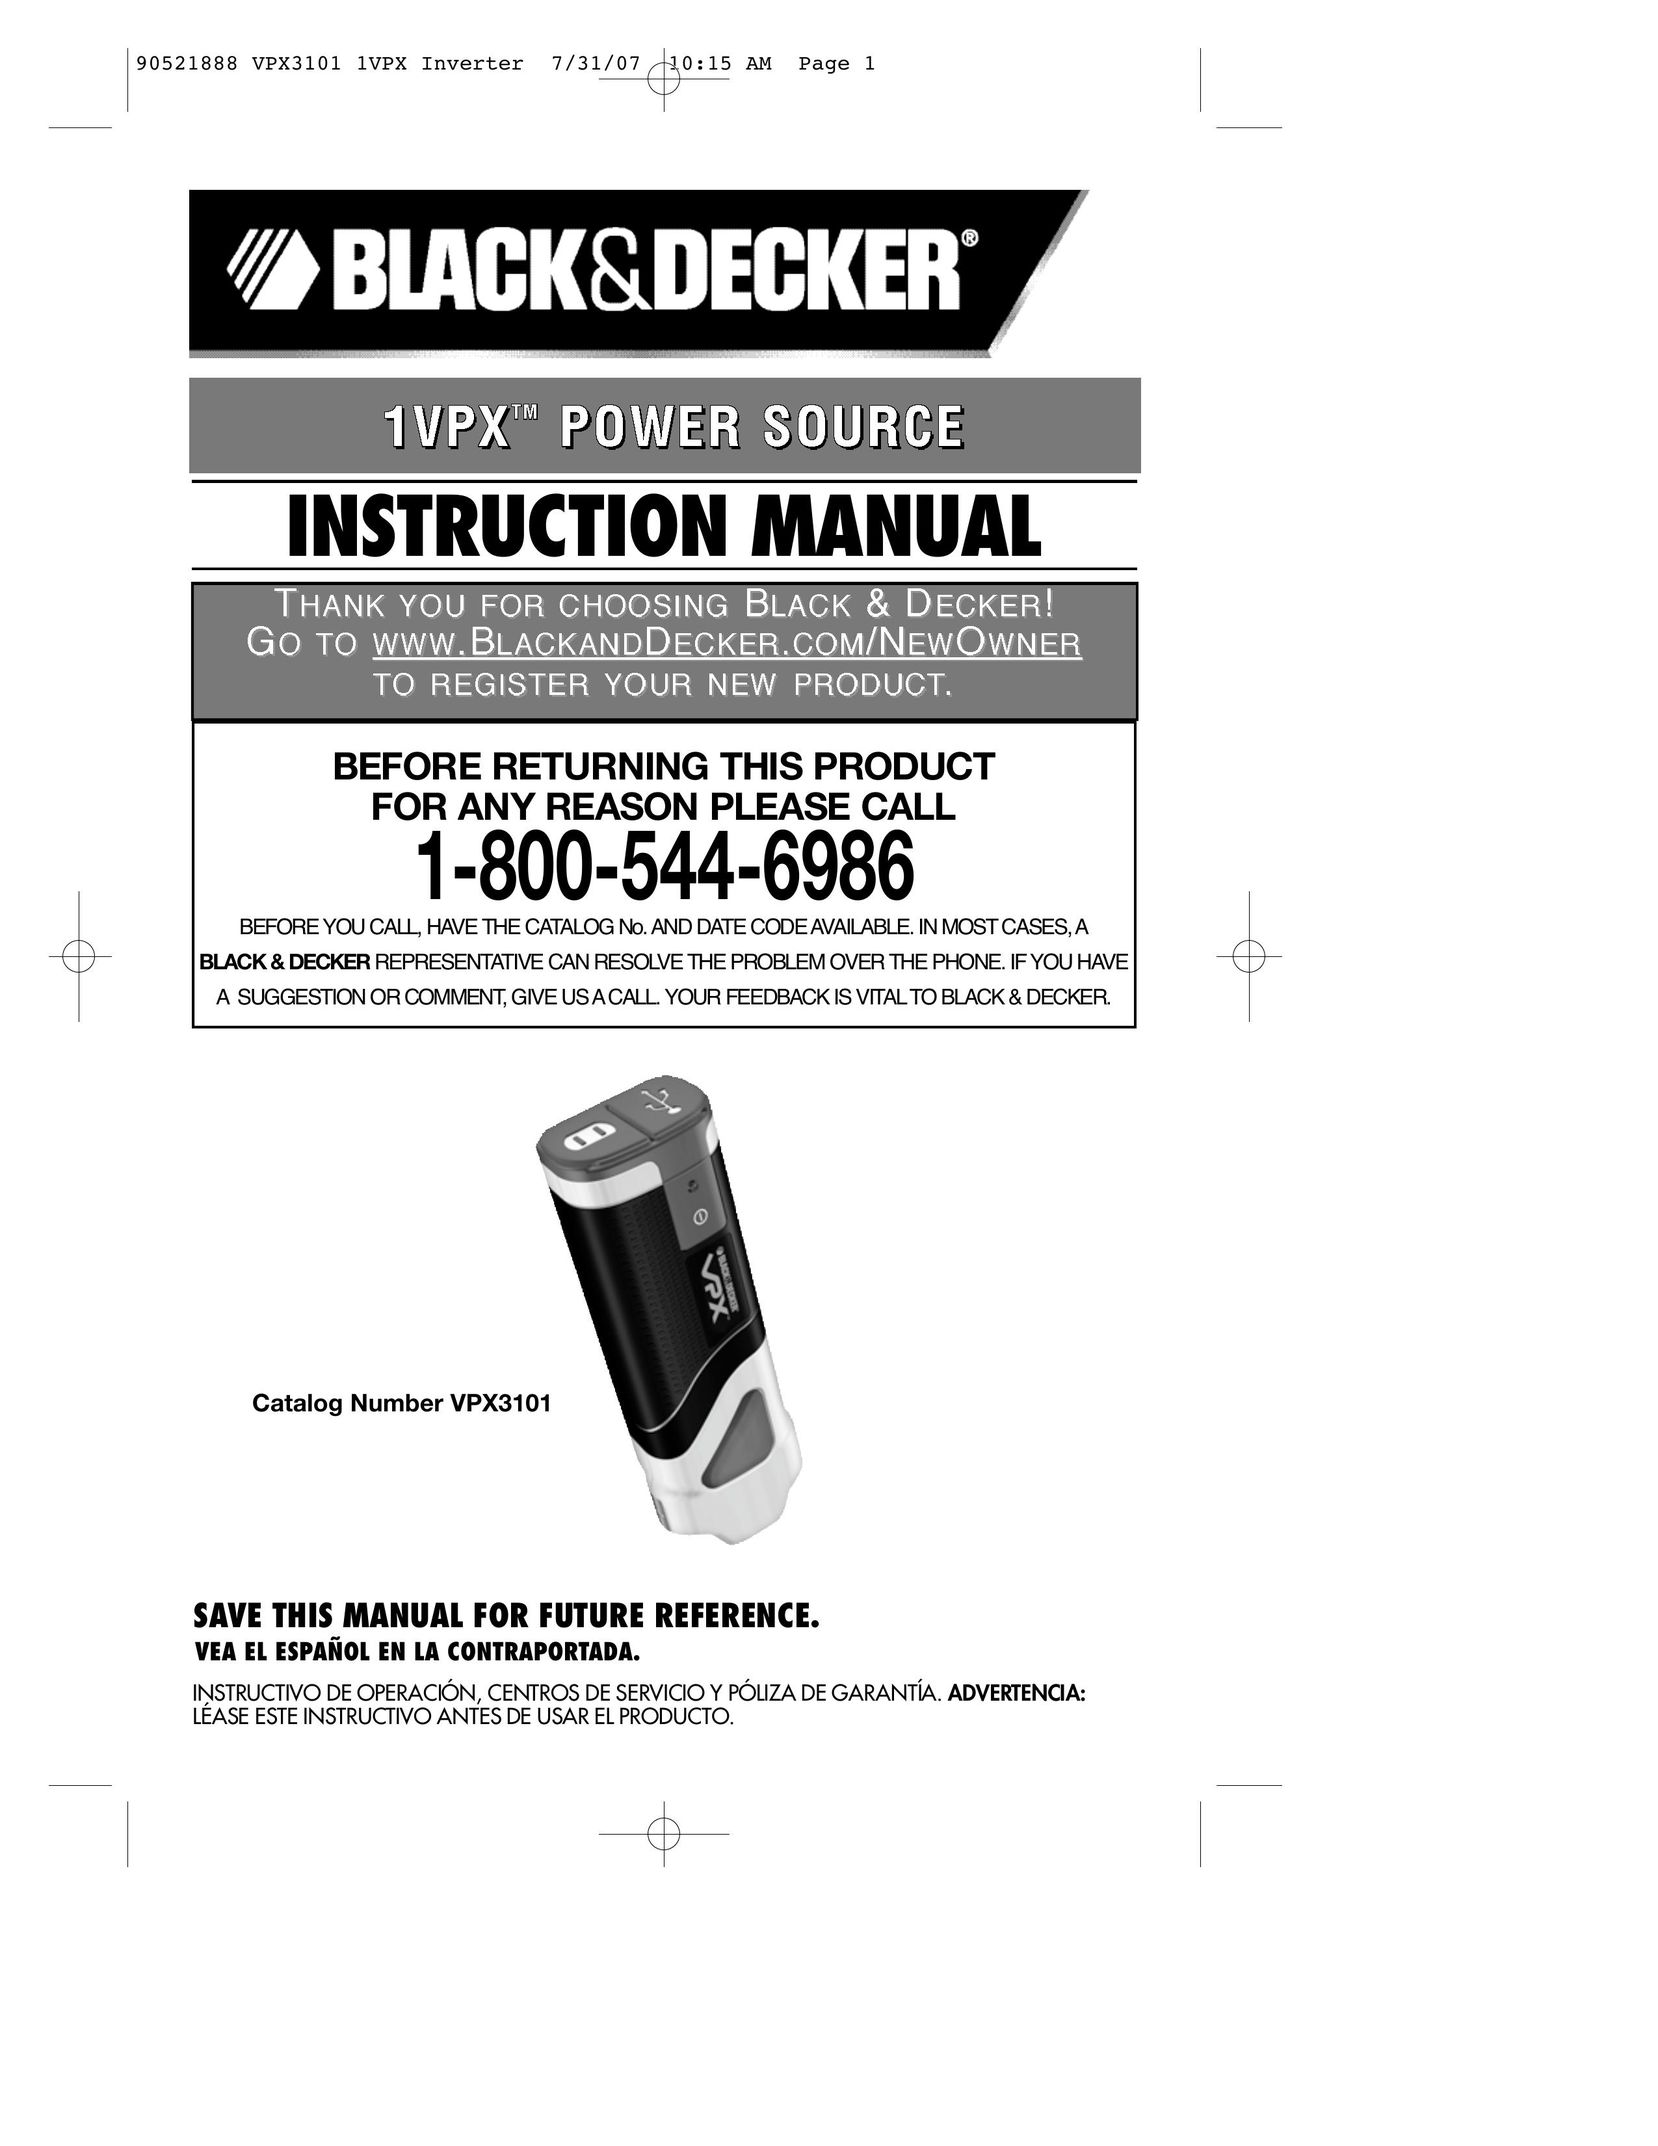 Black & Decker VPX3101 Power Supply User Manual